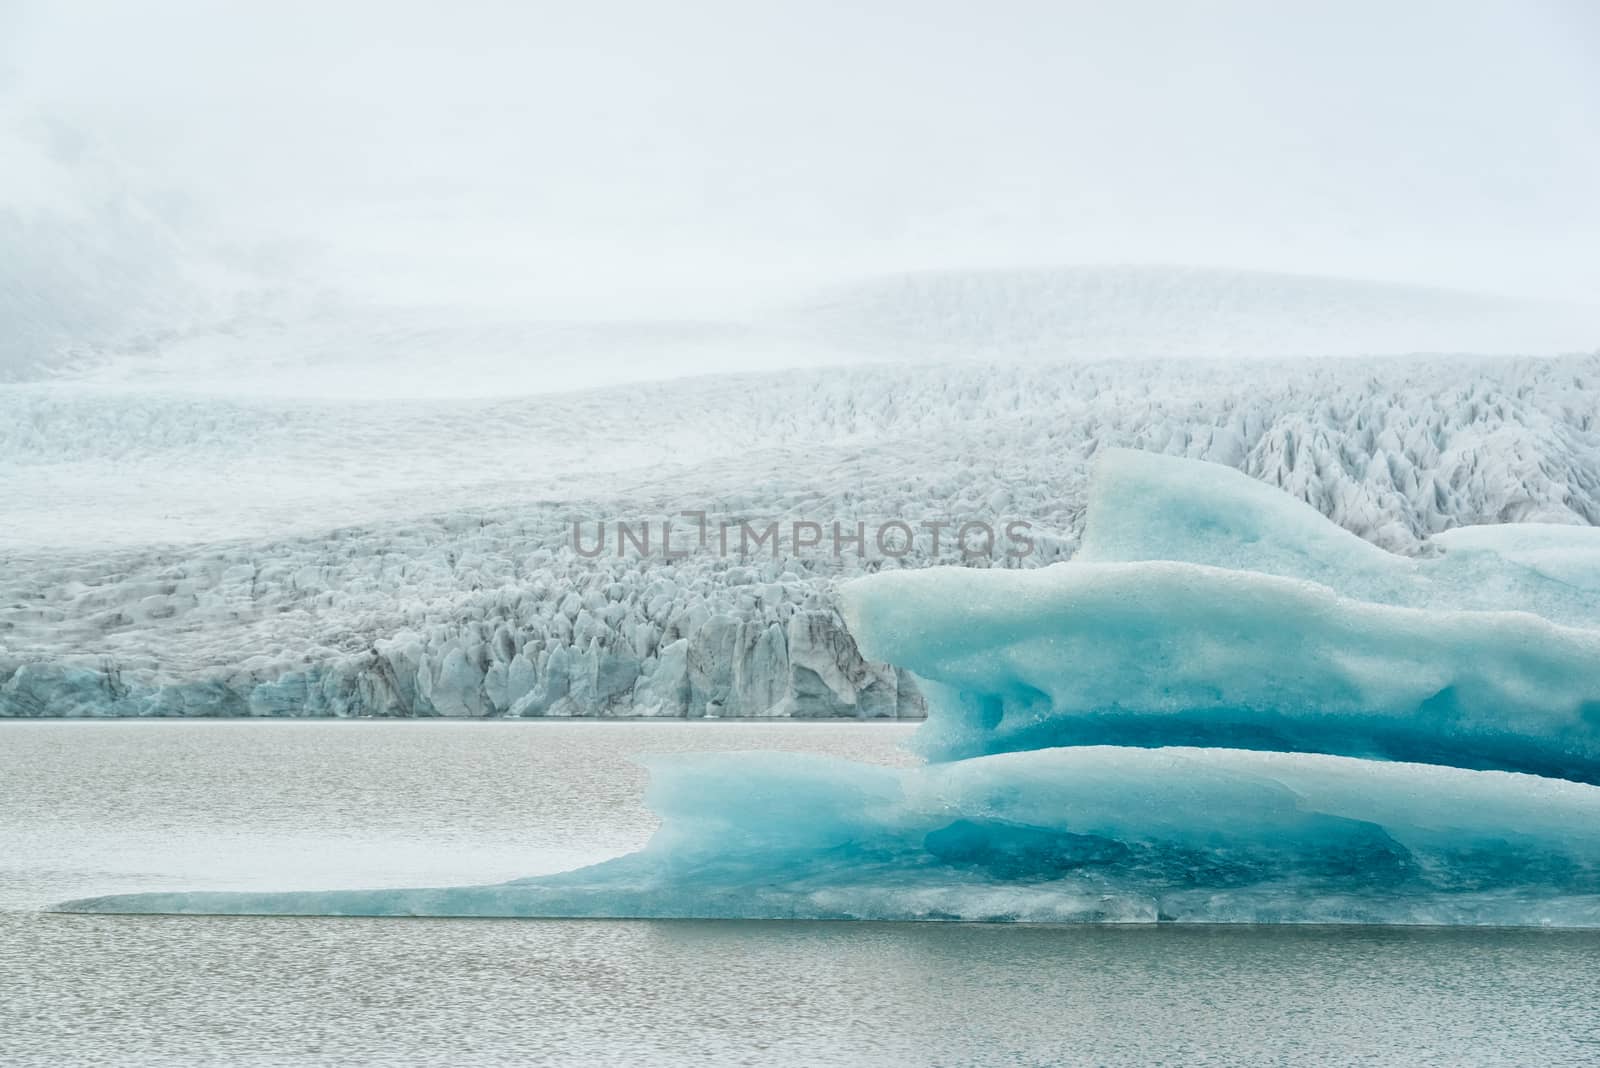 Closeup of iceberg in Fjallsarlon glacier lagoon, Iceland by LuigiMorbidelli